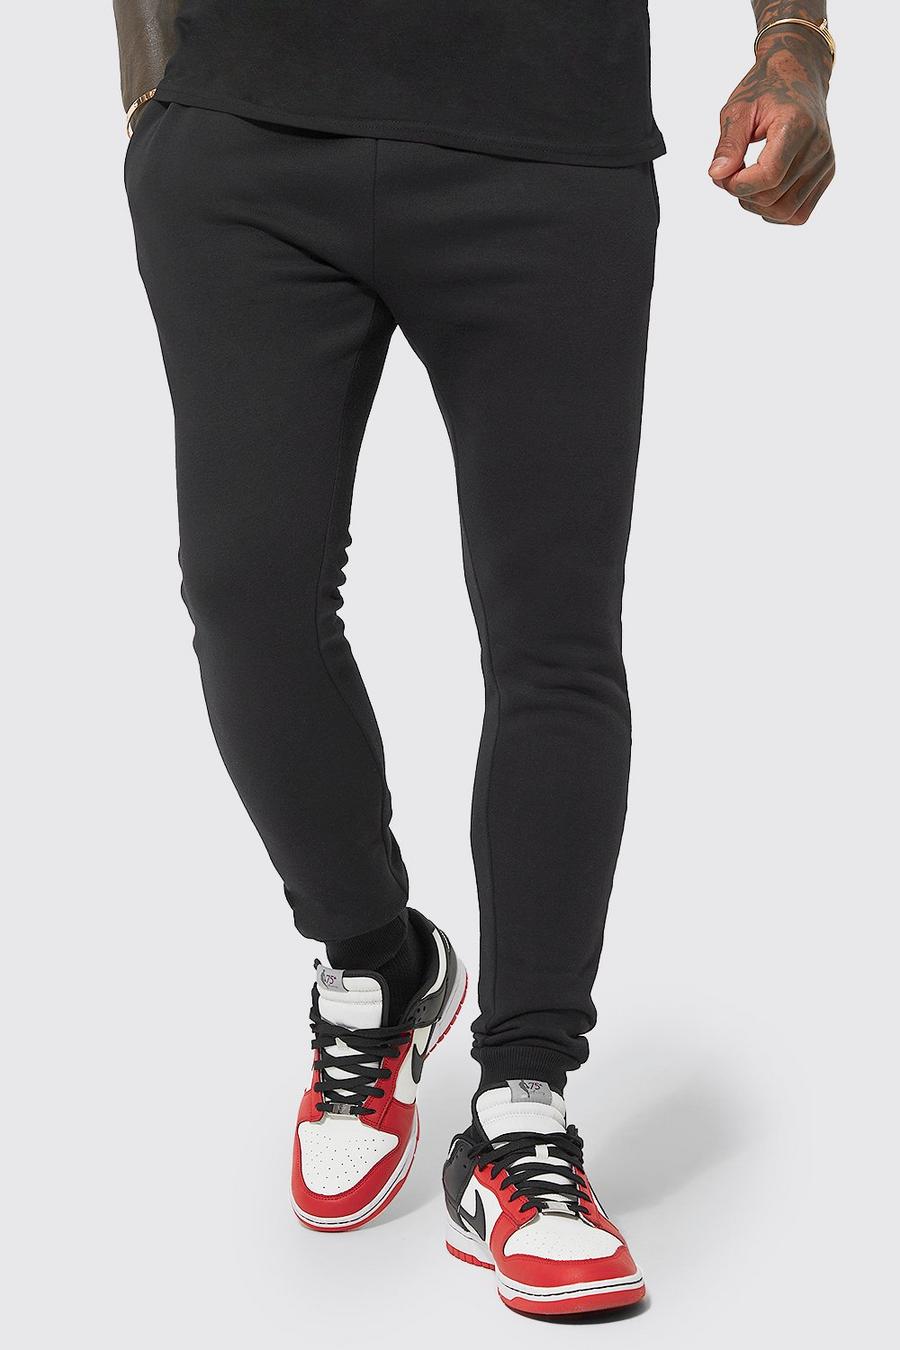 Pantaloni tuta Super Skinny Fit in cotone REEL, Black nero